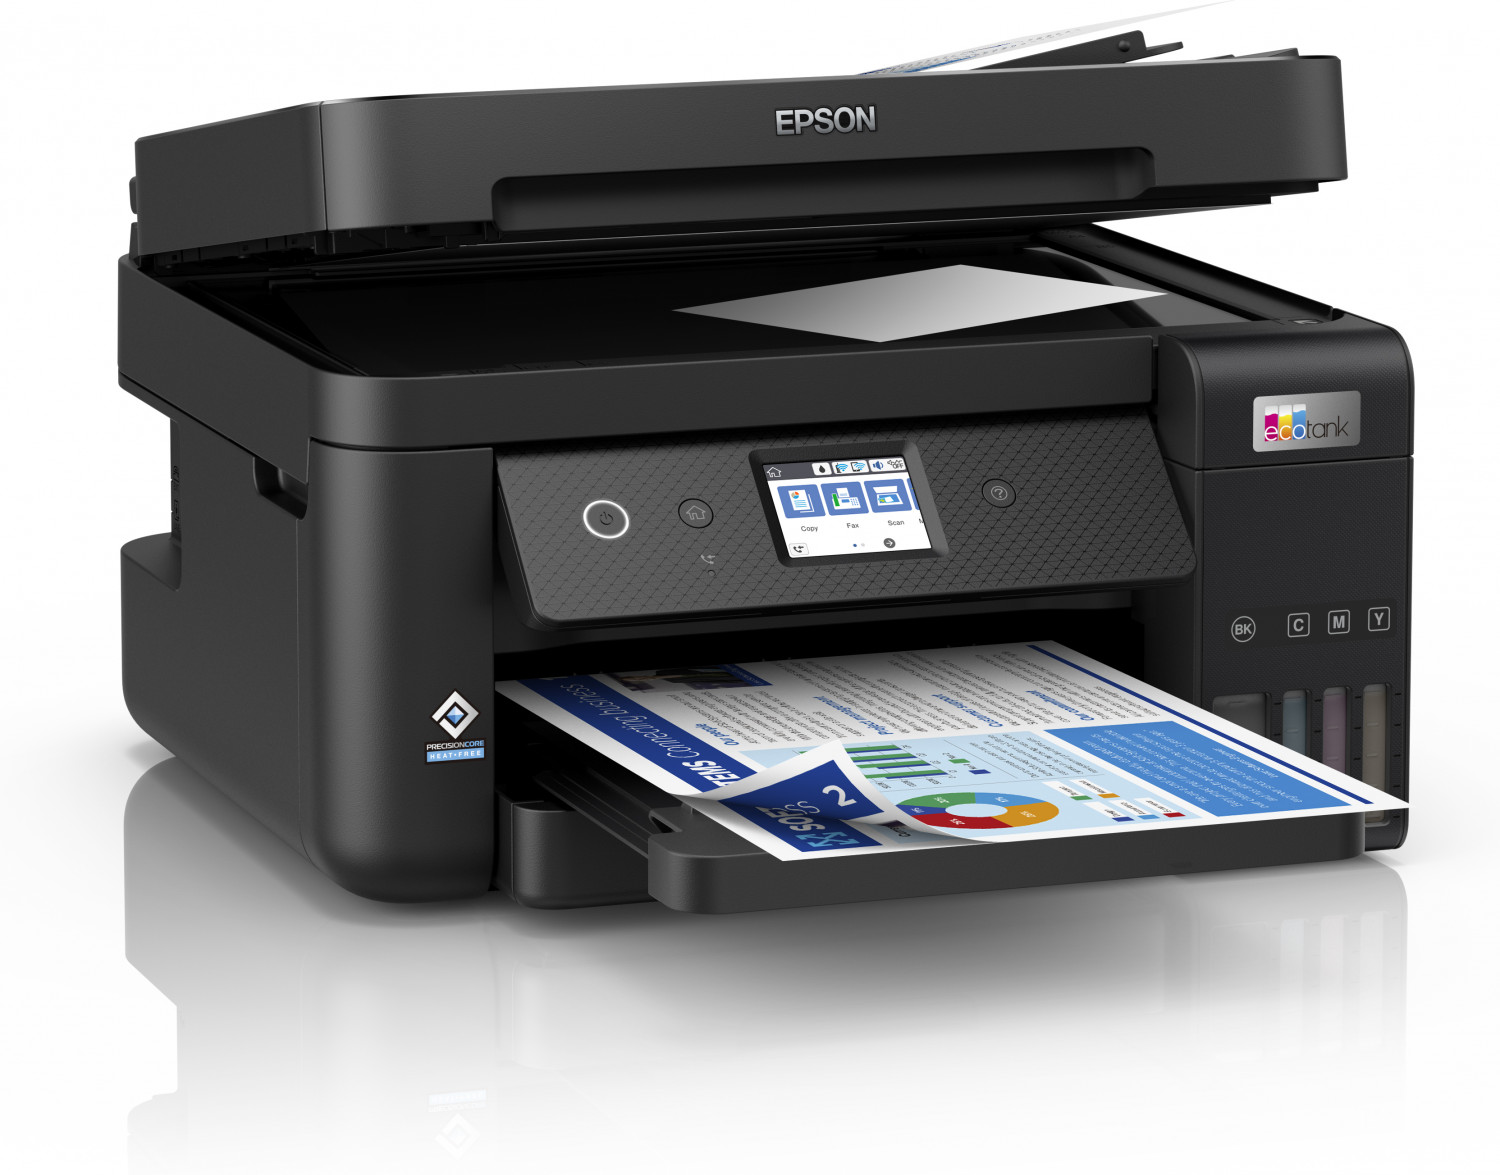 Epson ET-4800 Series Printer - Featured